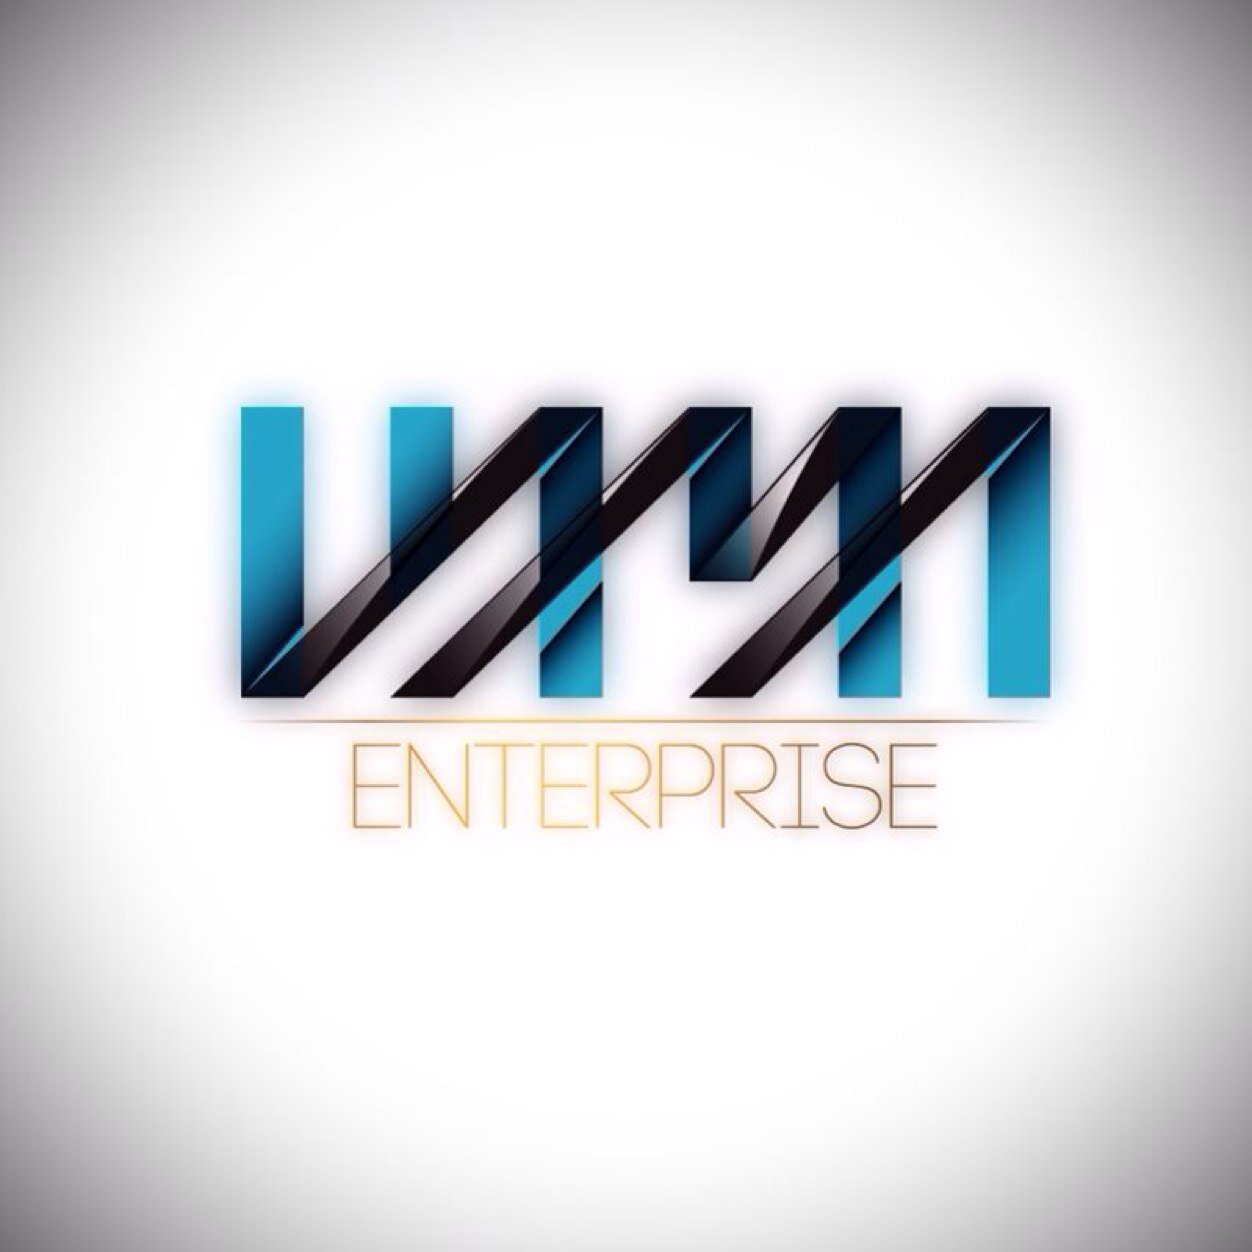 Welcome to the Enterprise, may the gemini lead your journey | insta: @LyMa_Enterprise @JustinKeesInc | LyMa.Enterprise@gmail.com | Beatmaker | Music/Videoprod.